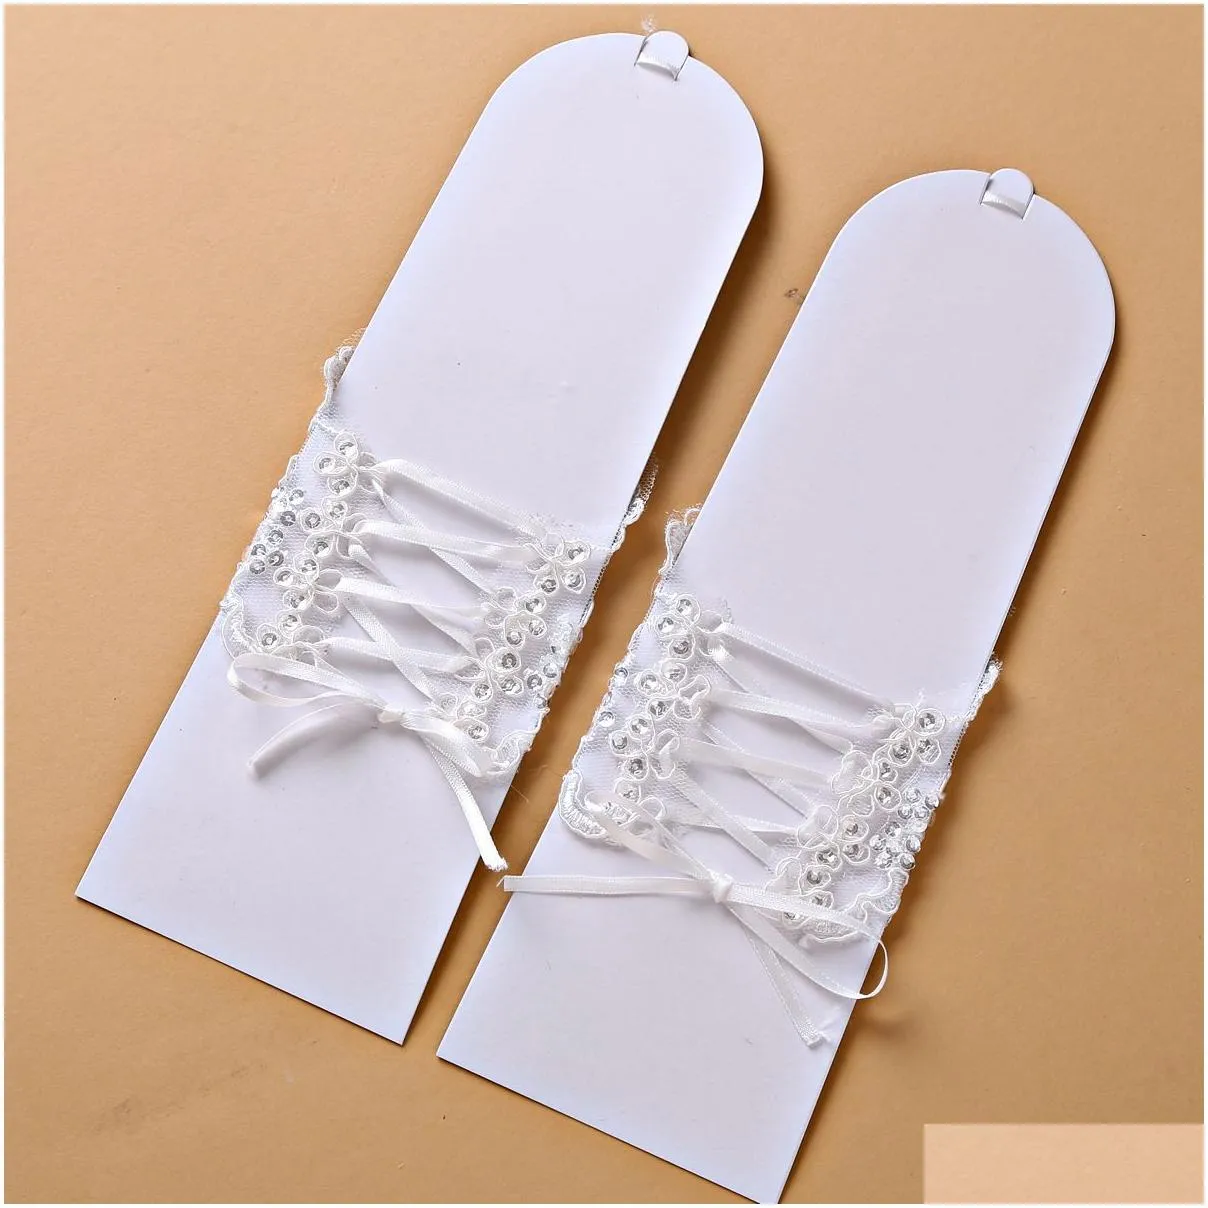 Elegant Beaded Lace Short Bridal Gloves Fingerless White red Ivory Wedding Accessories